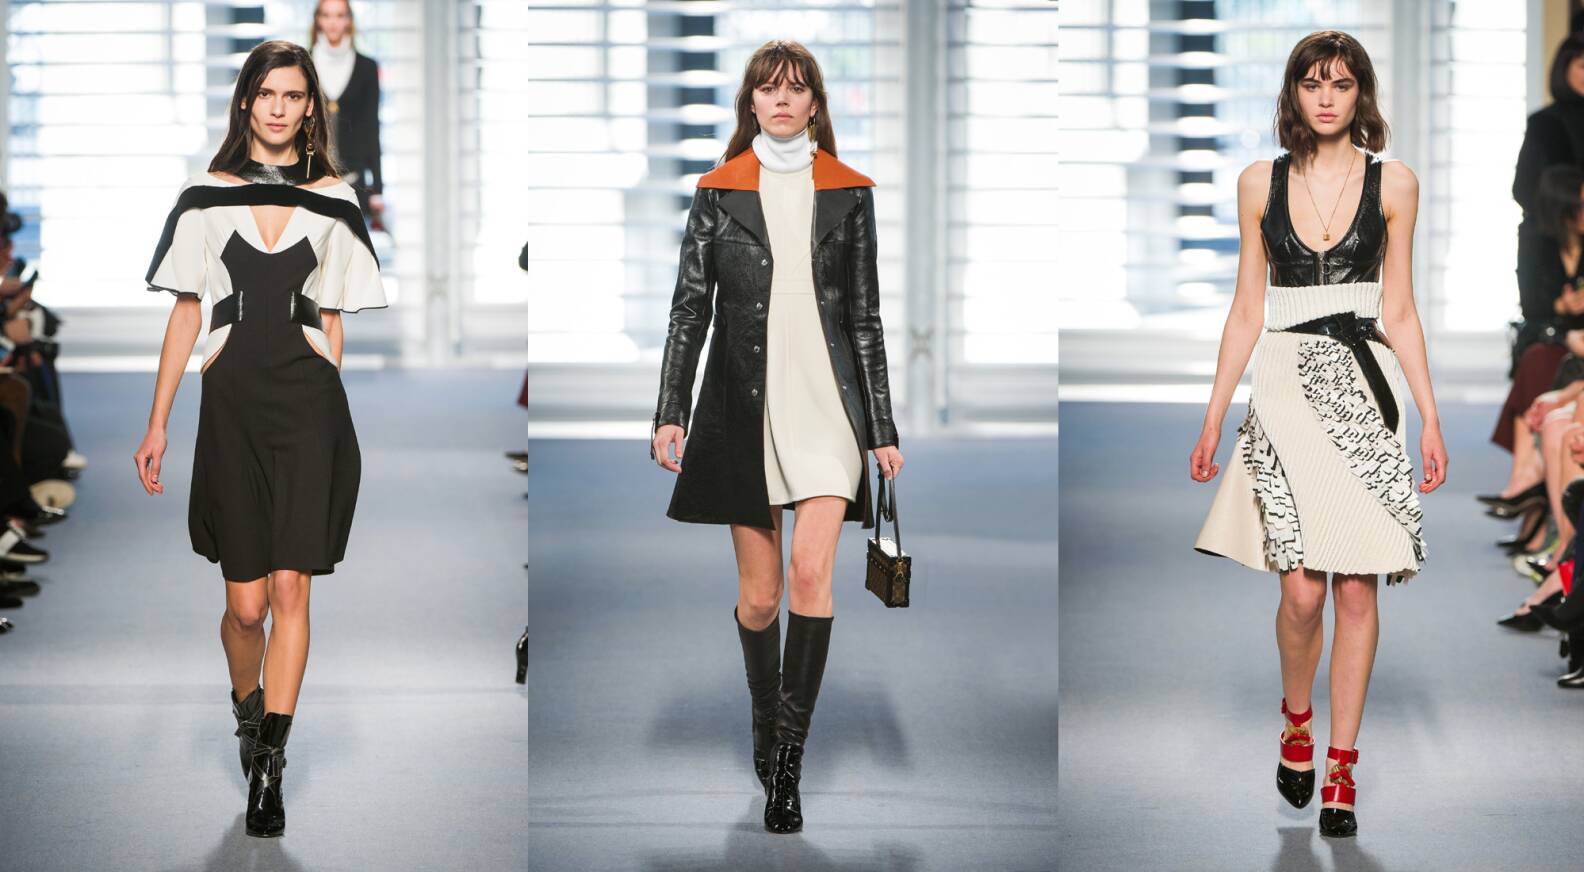 New Louis Vuitton Collection Fall/Winter 2021 Handbags Wild at Heart